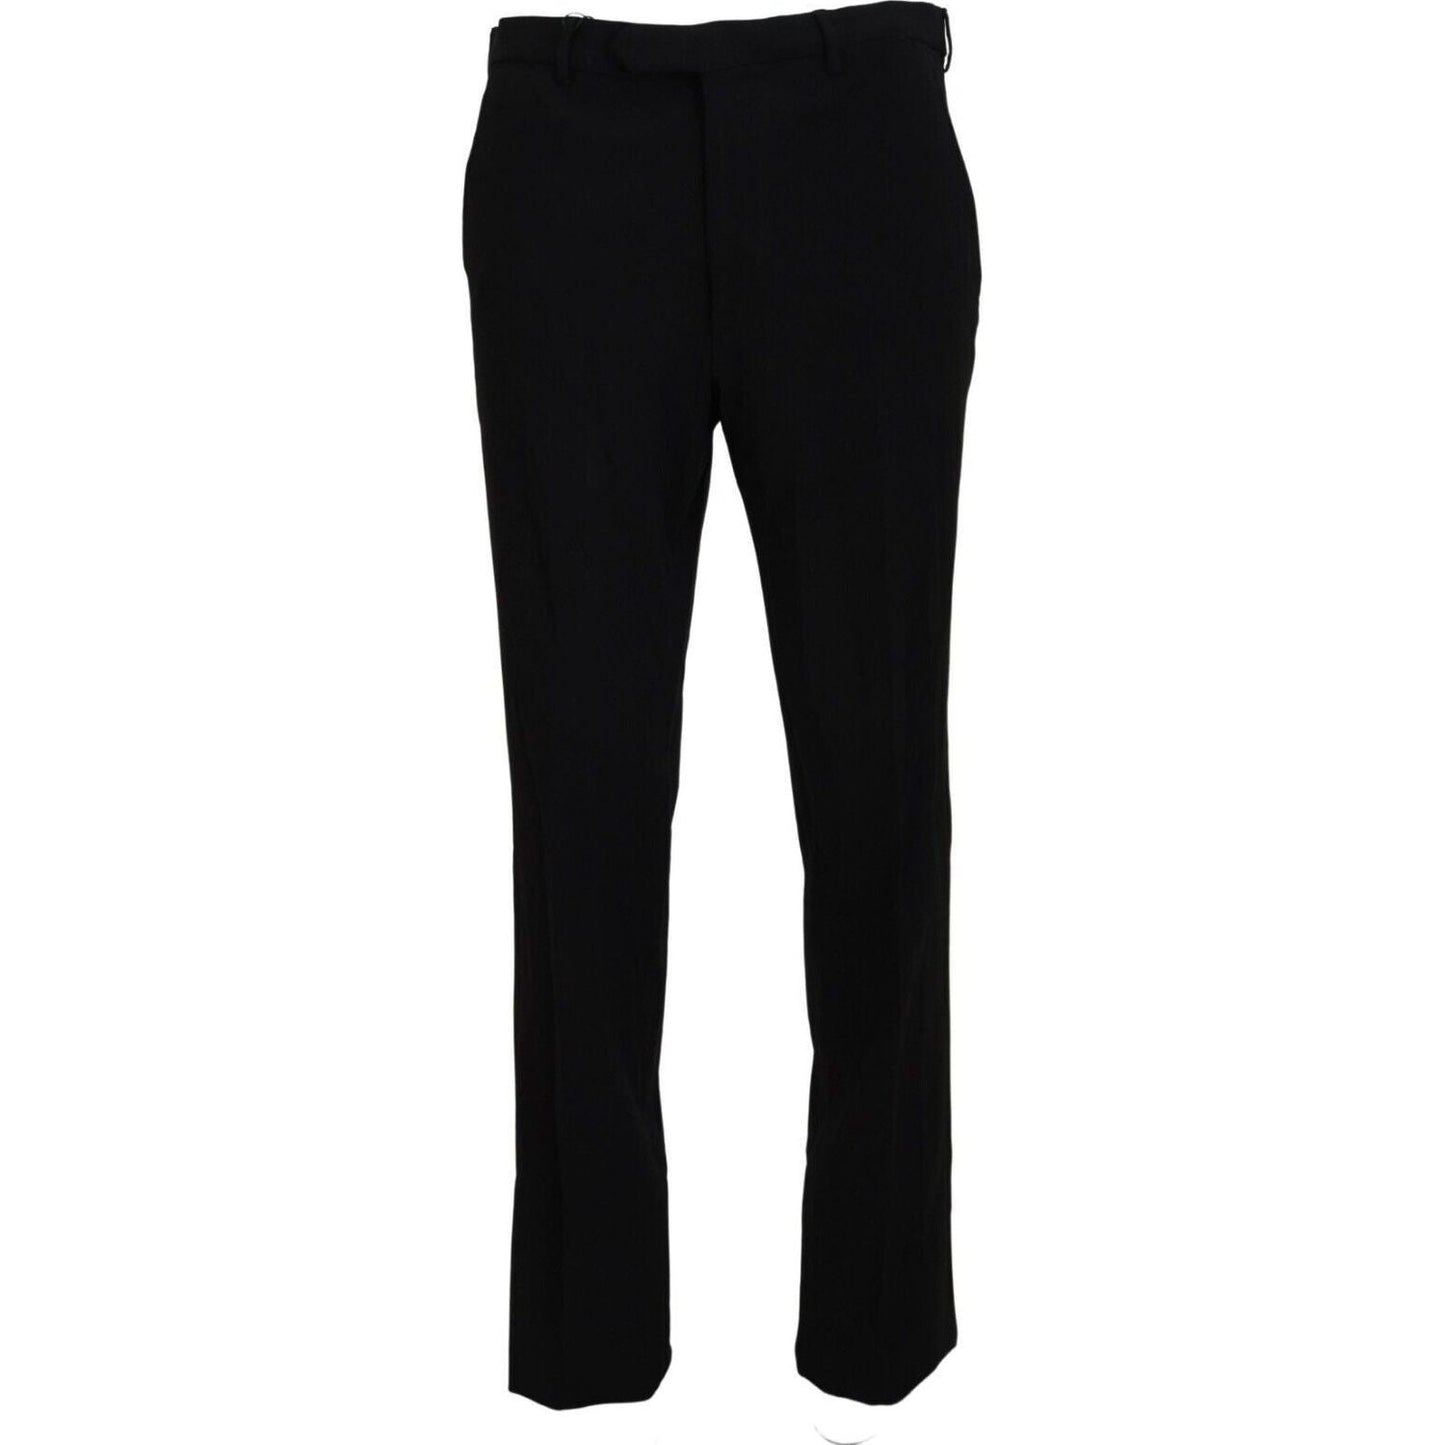 BENCIVENGA Elegant Black MainLine Trousers black-straight-fit-men-formal-trousers-pants